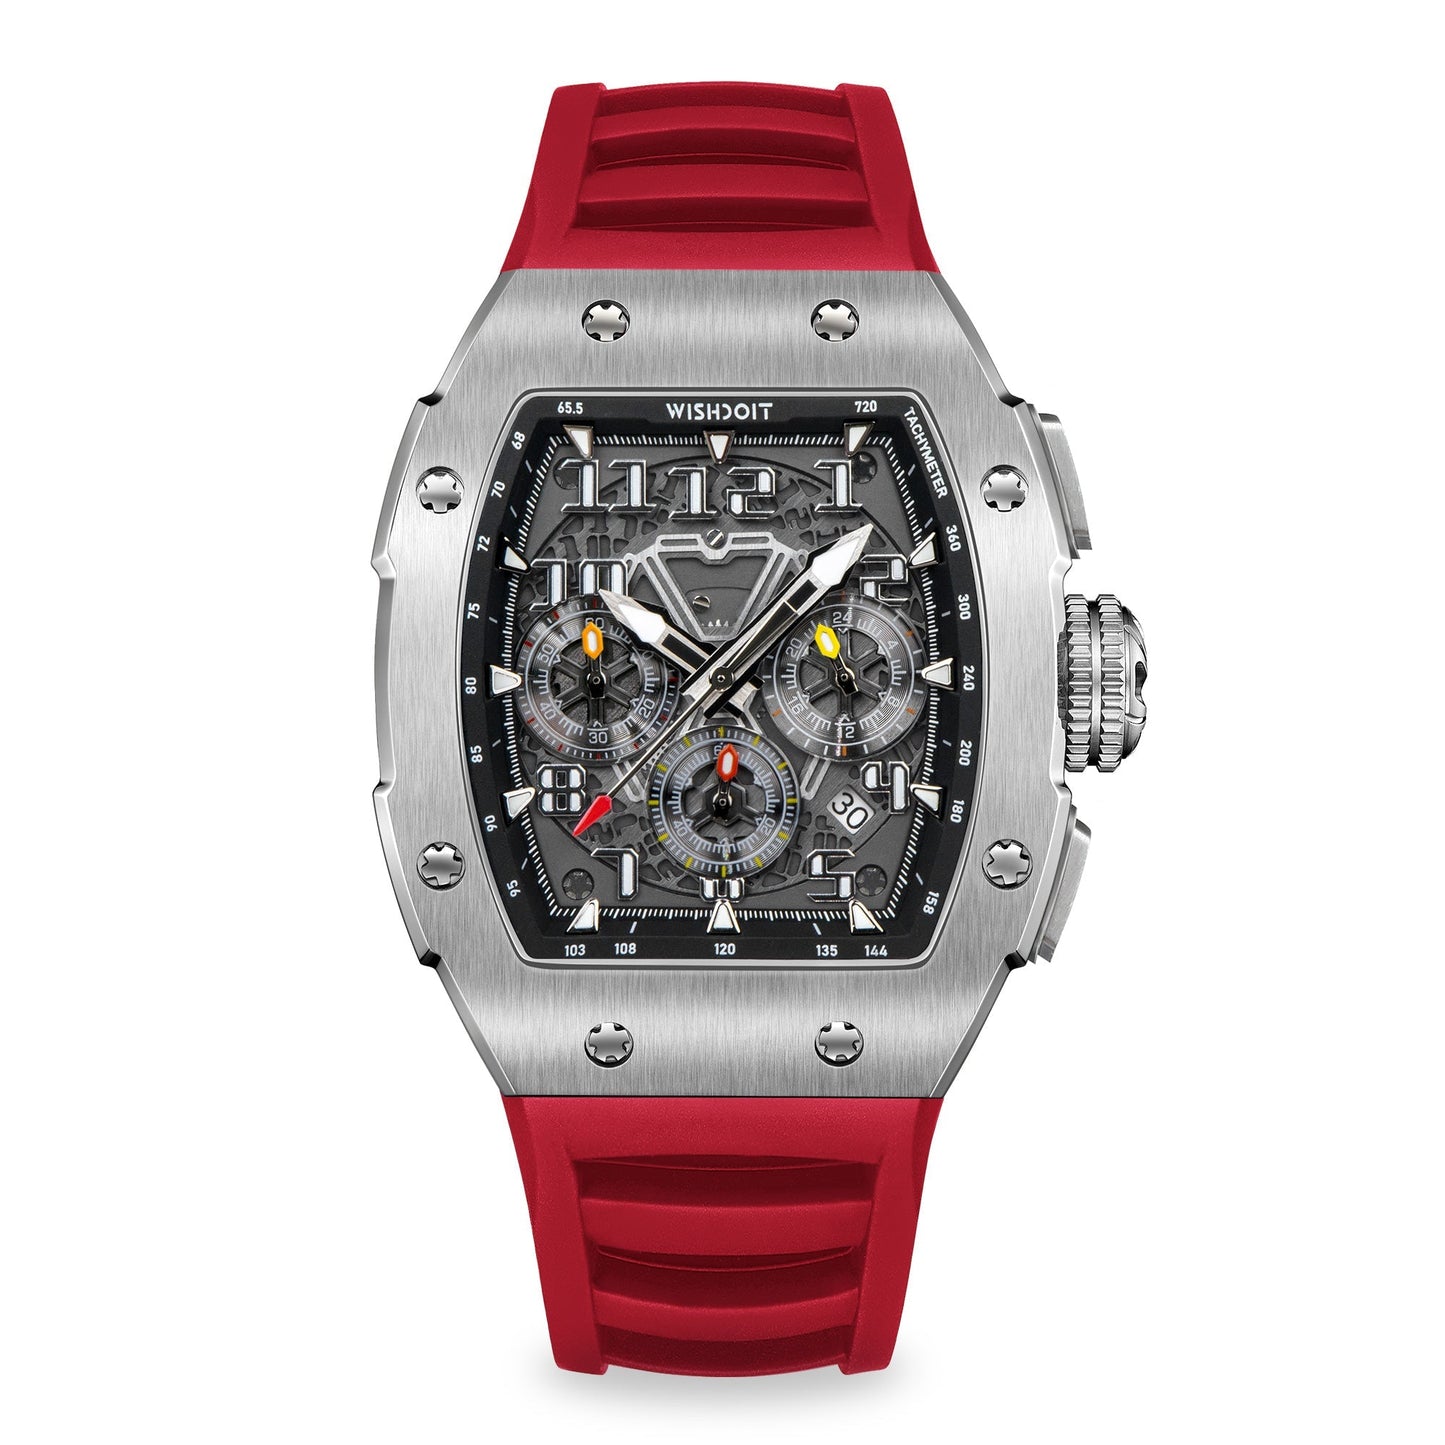 Shop Racing GT Chronograph Quartz Silver Red Watch on Wishdoit Watches